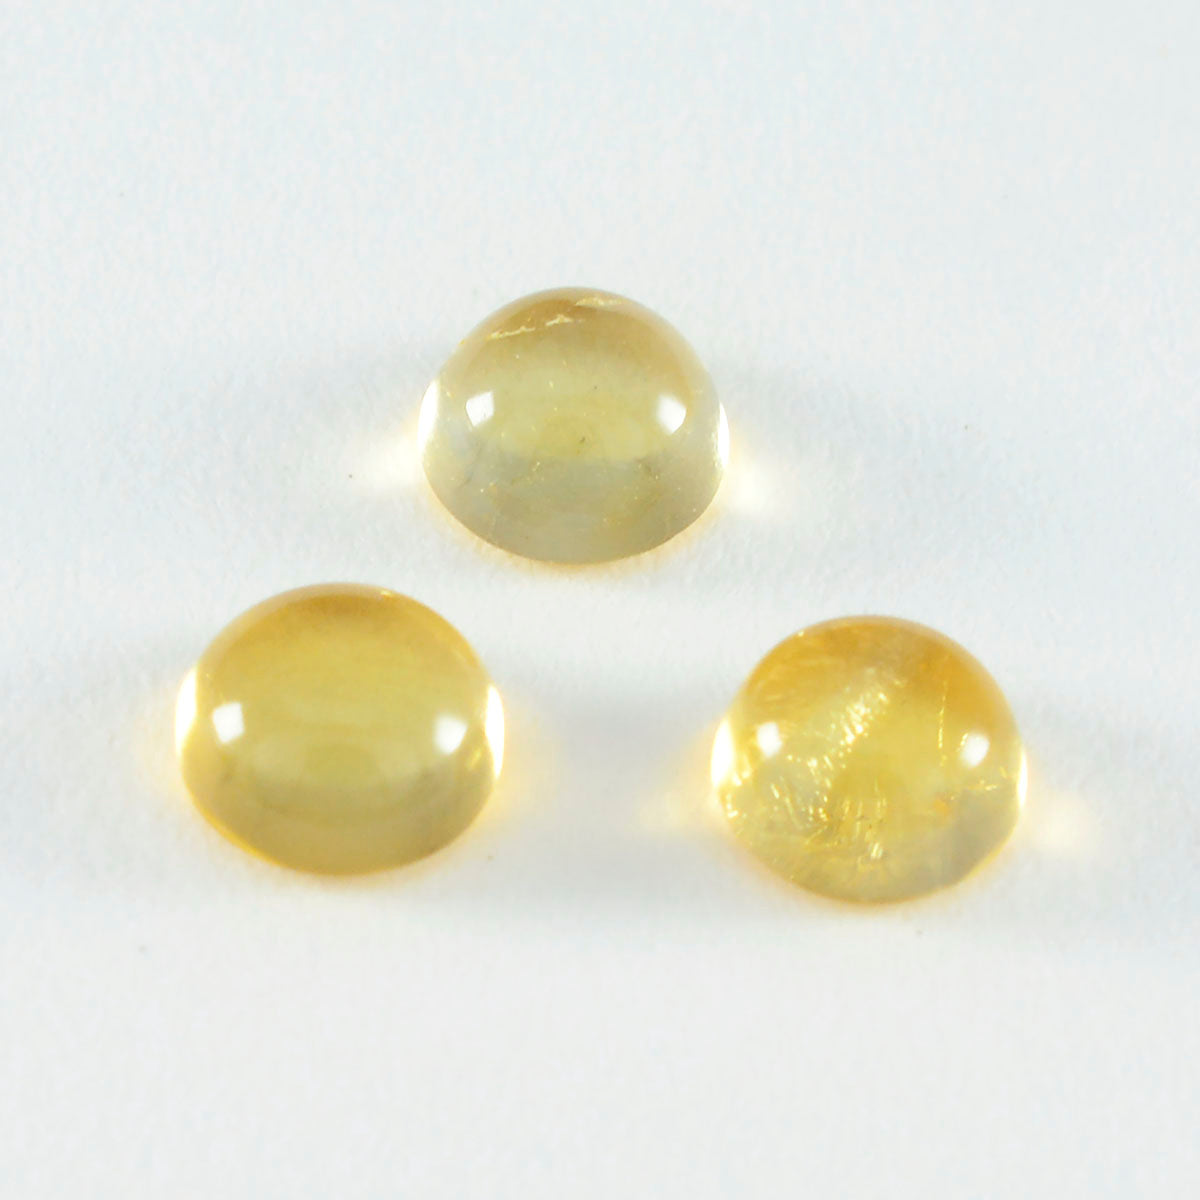 Riyogems 1PC Yellow Citrine Cabochon 14x14 mm Round Shape A Quality Stone